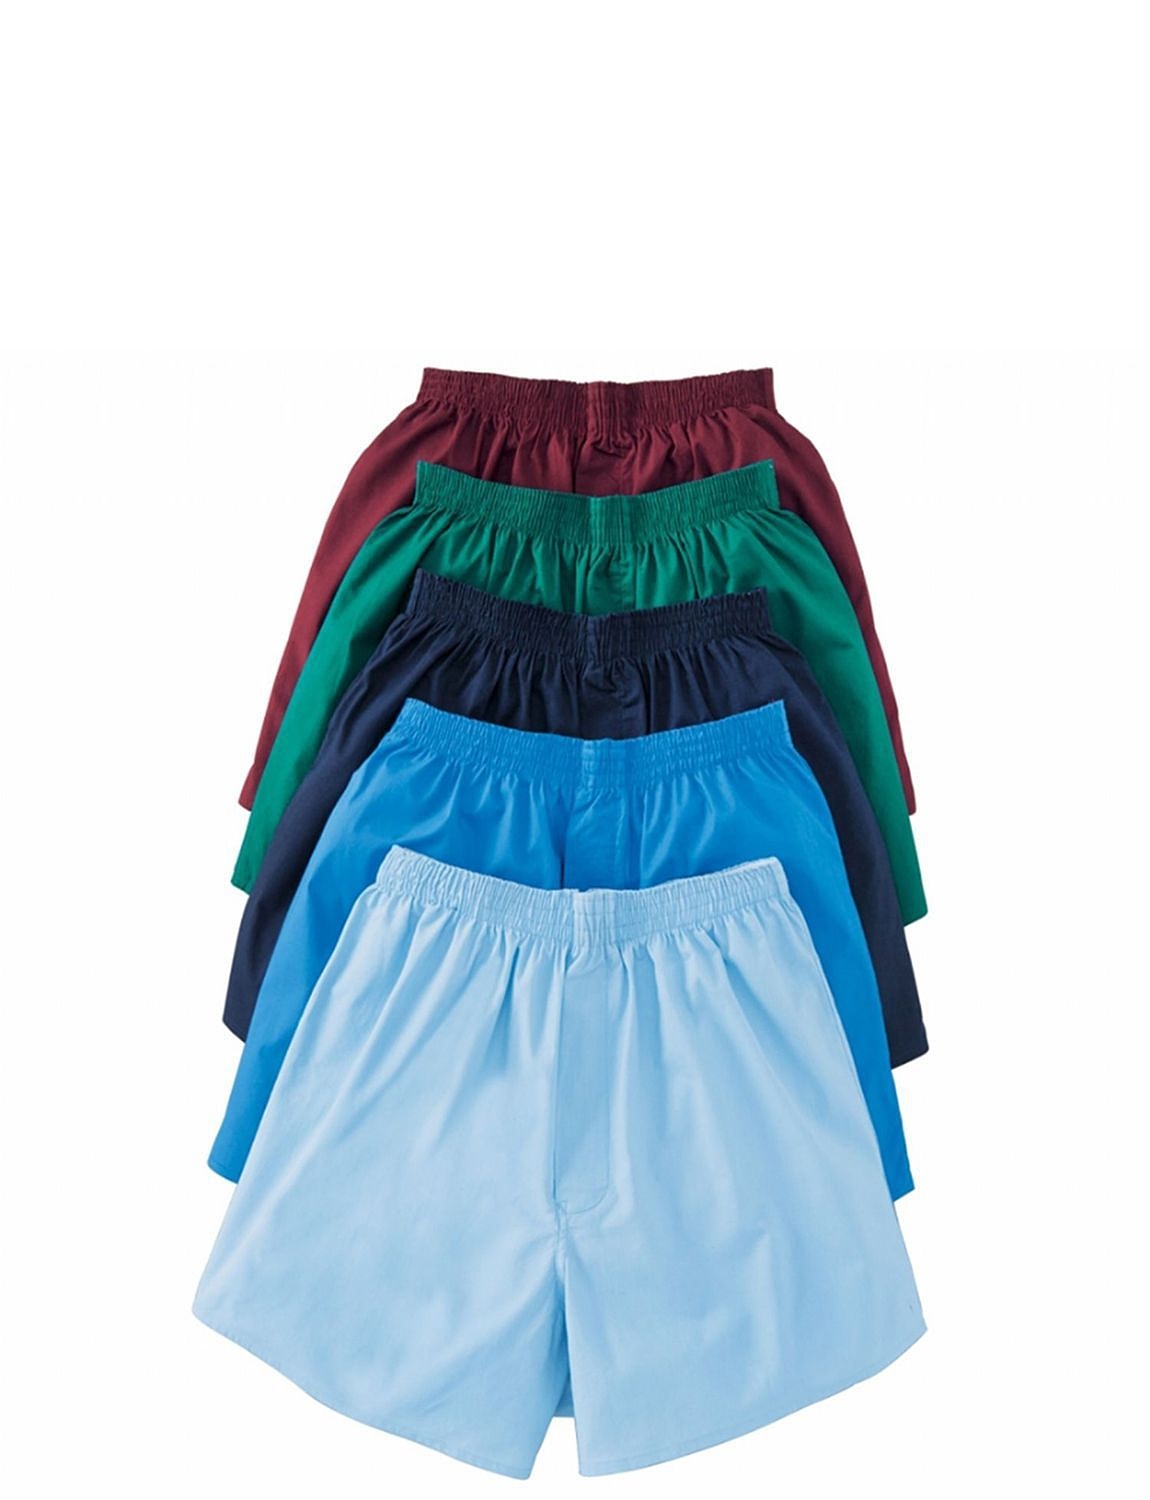 5 Pack High Rise Plain Boxer Shorts - Menswear Underwear